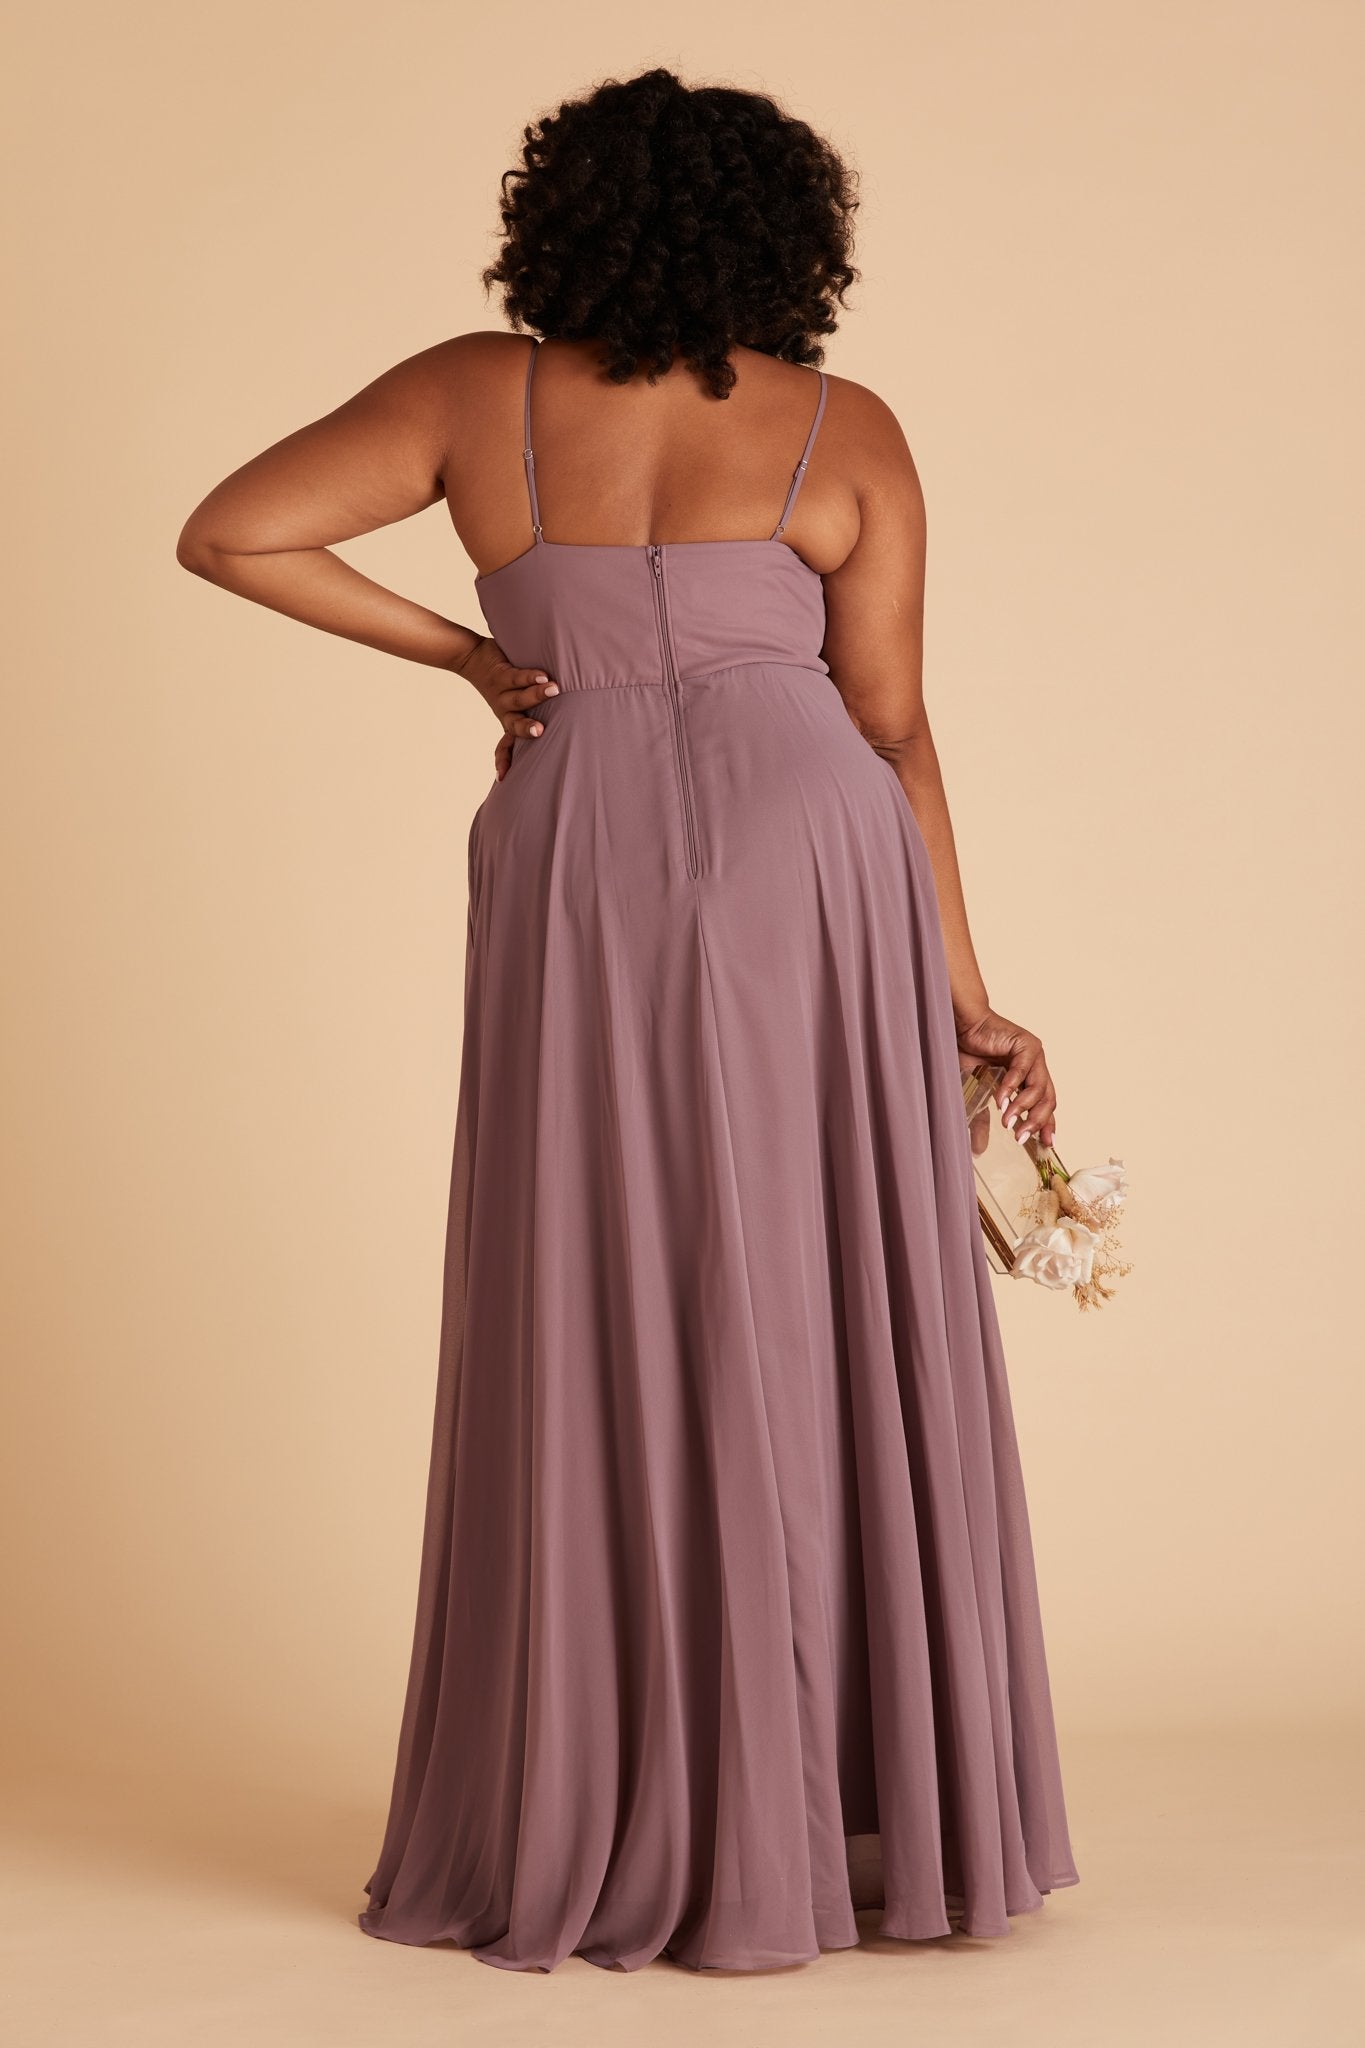 Kaia plus size bridesmaids dress in dark mauve purple chiffon by Birdy Grey, back view